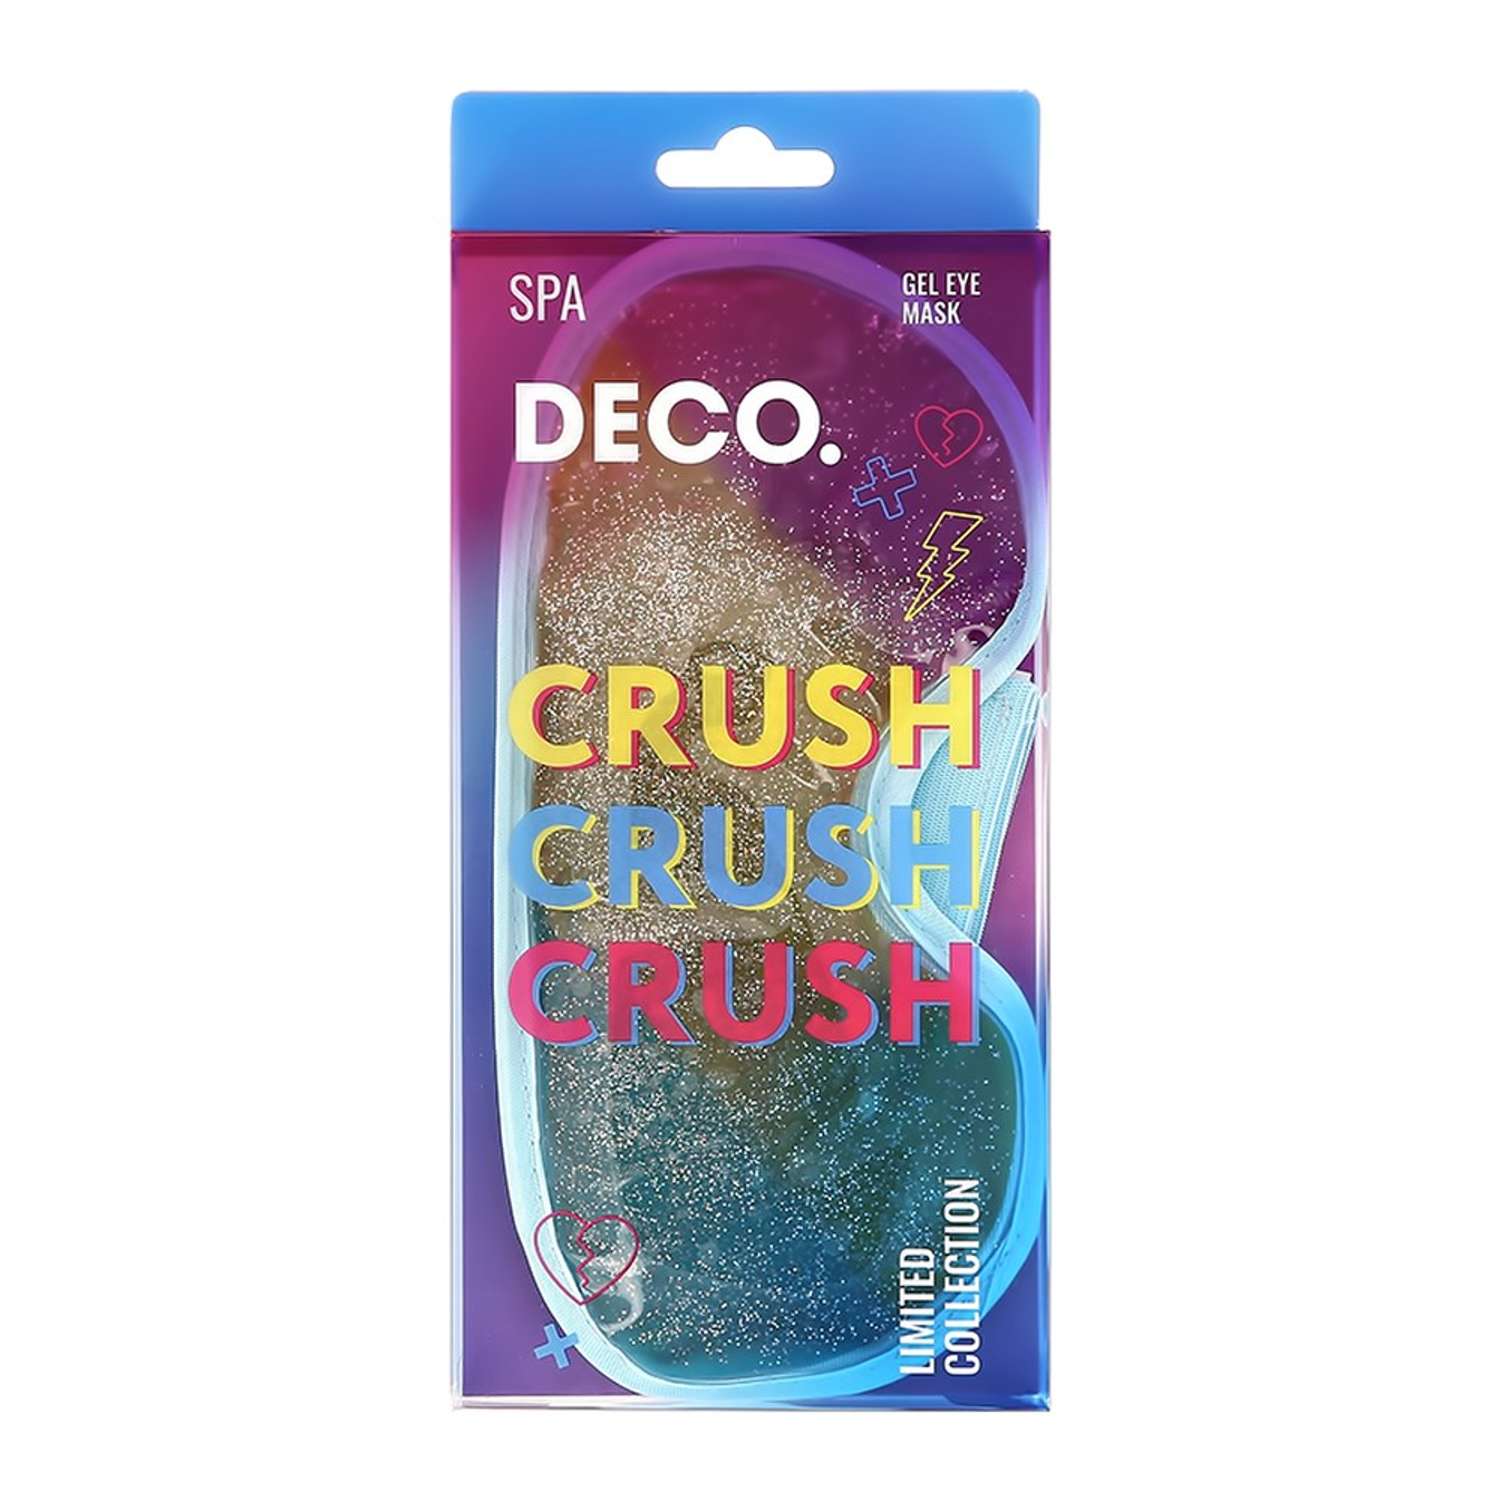 Маска для глаз DECO. Crush crush crush гелевая - фото 1